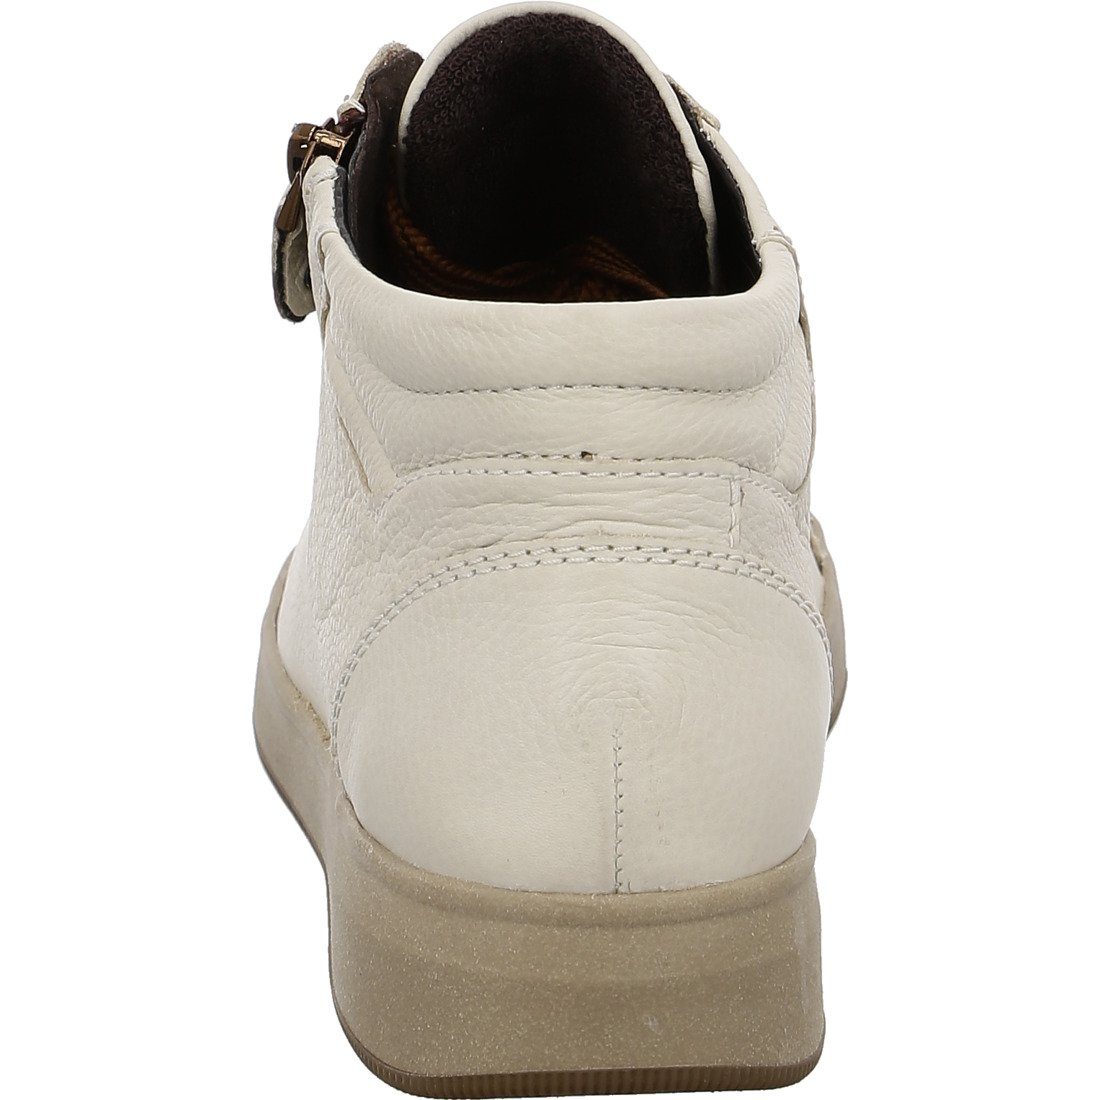 Ara Ara 049143 offwhite Schuhe, Sneaker Nubuk Damen - Sneaker Rom